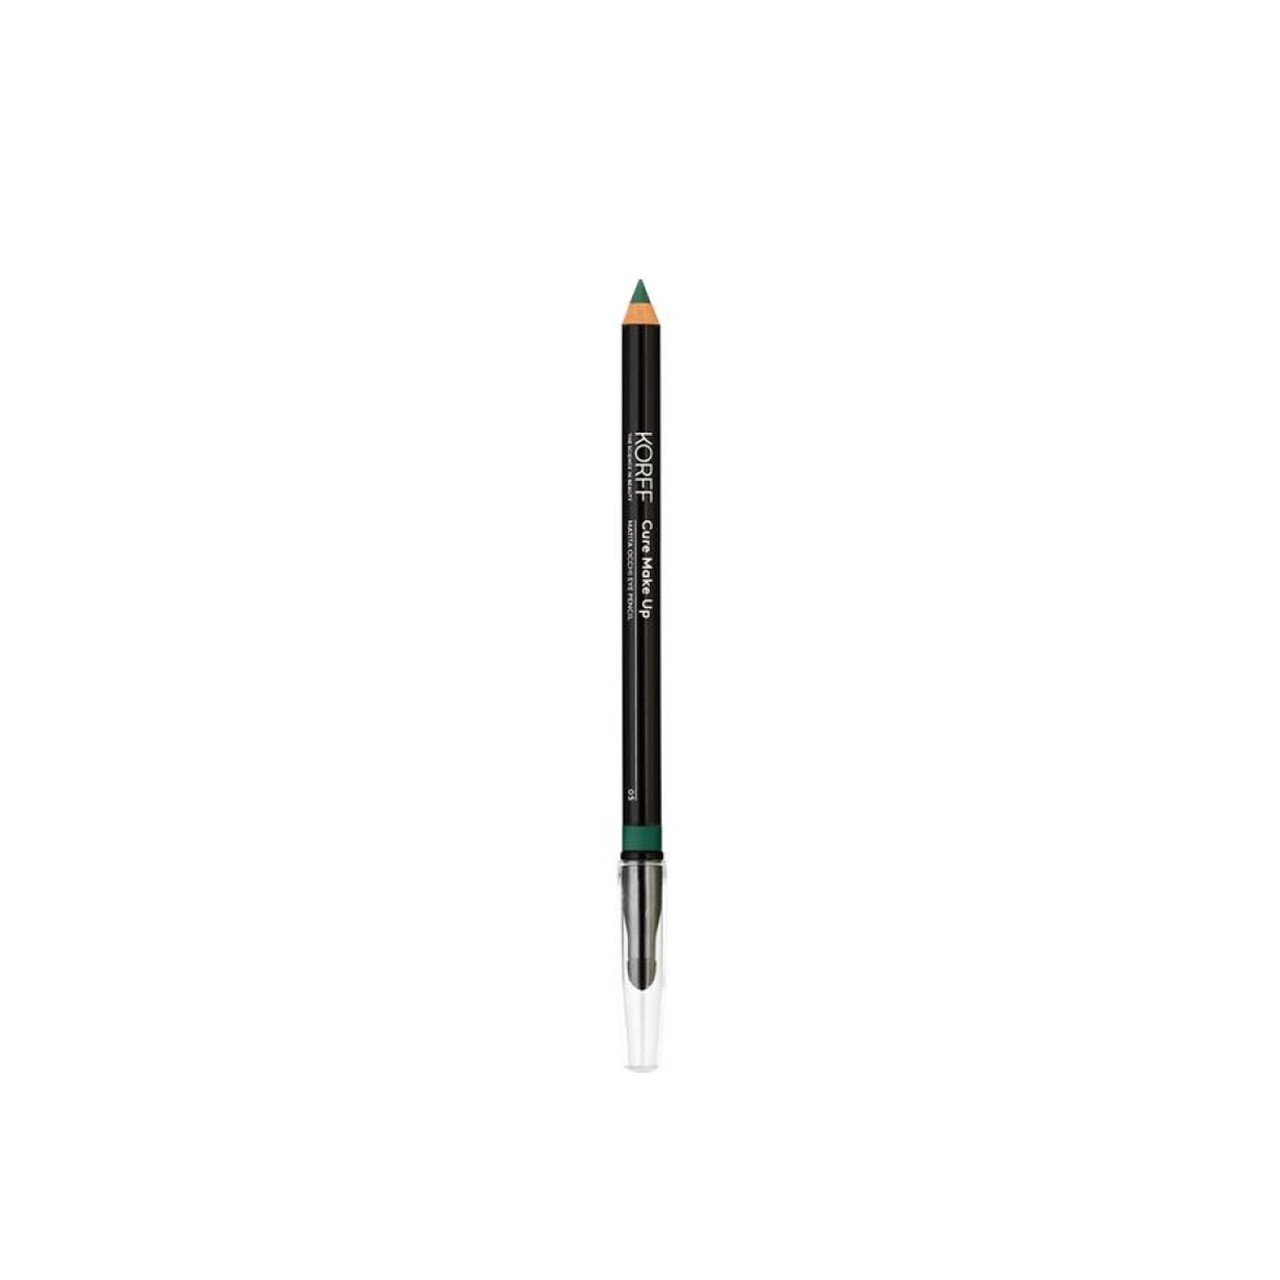 Korff Cure Make-Up Eye Pencil 05 1.1g (0.039 oz)